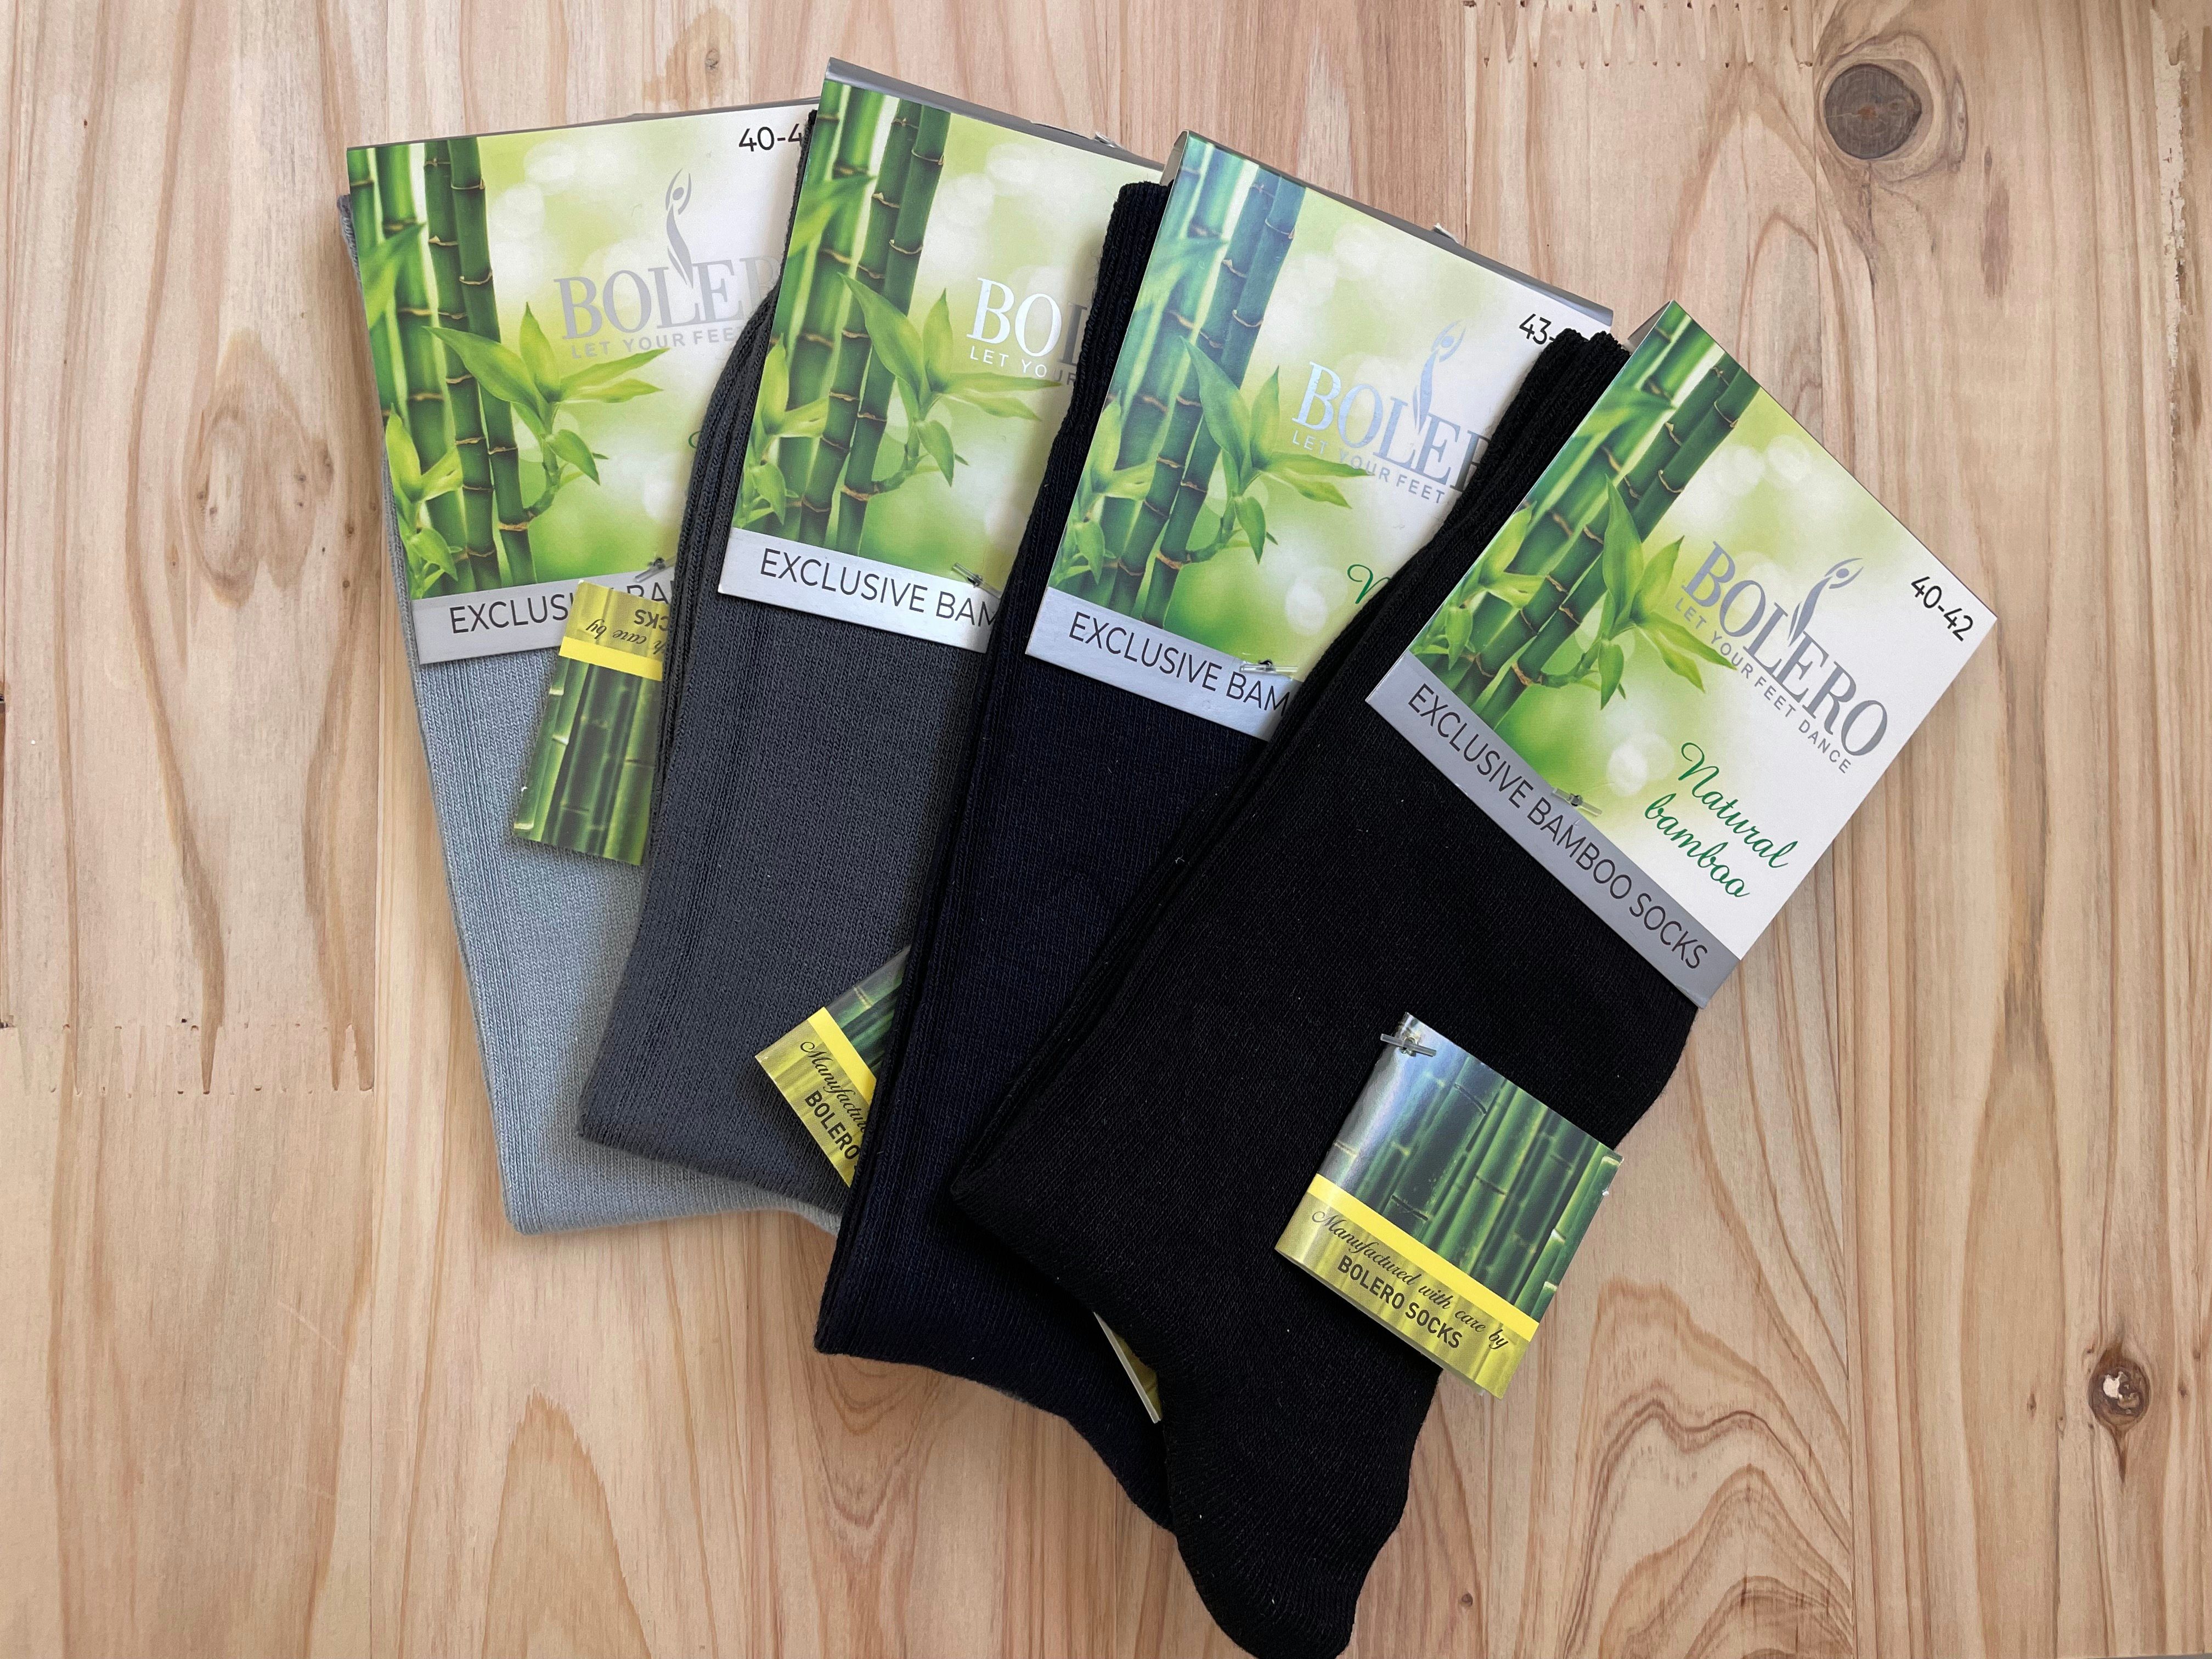 Bolero Socken Model: Bambus - lang (Viskose aus Bambus-Zellstoff) 6 Paar elastisch, atmungsaktiv, antibakteriell, wärmeregulierend Grau